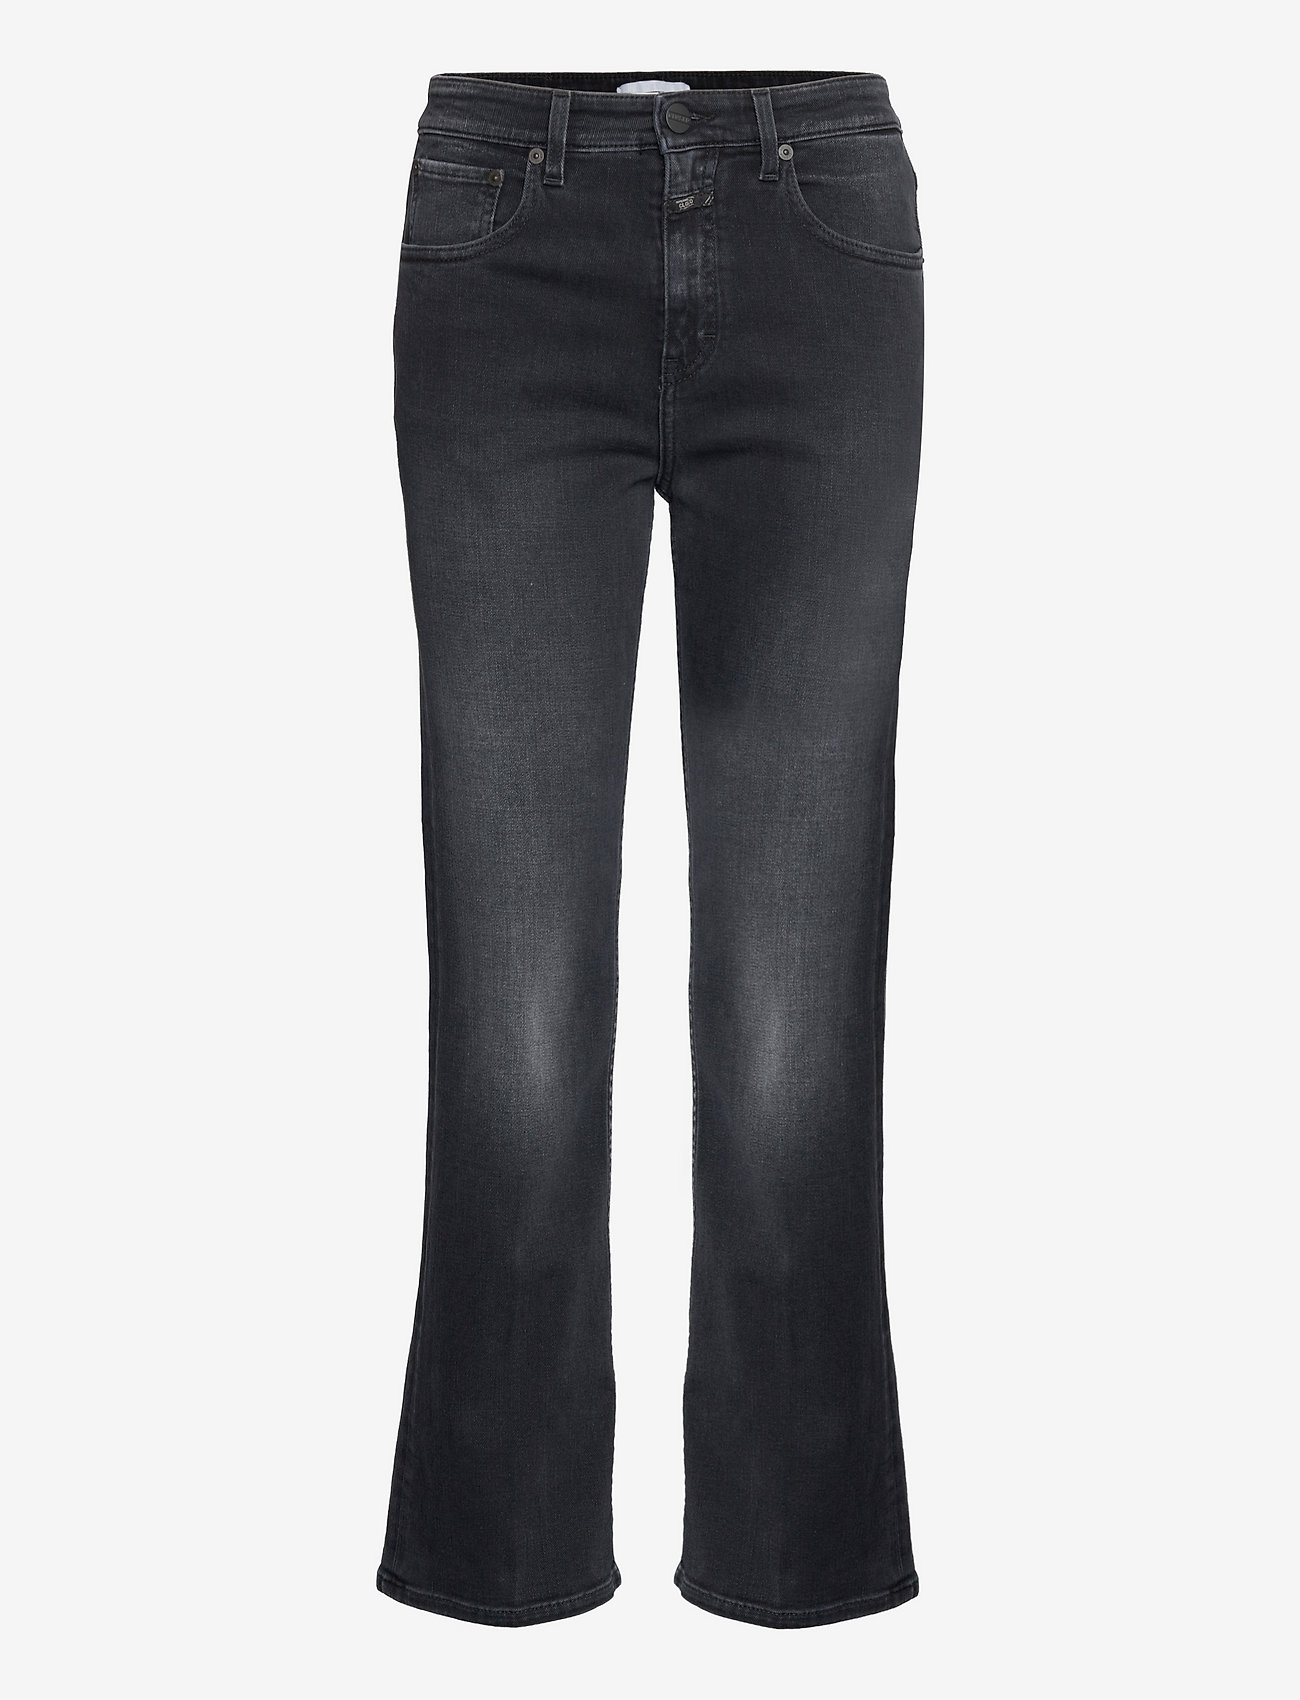 Closed - womens pant - jeans droites - dark grey - 1